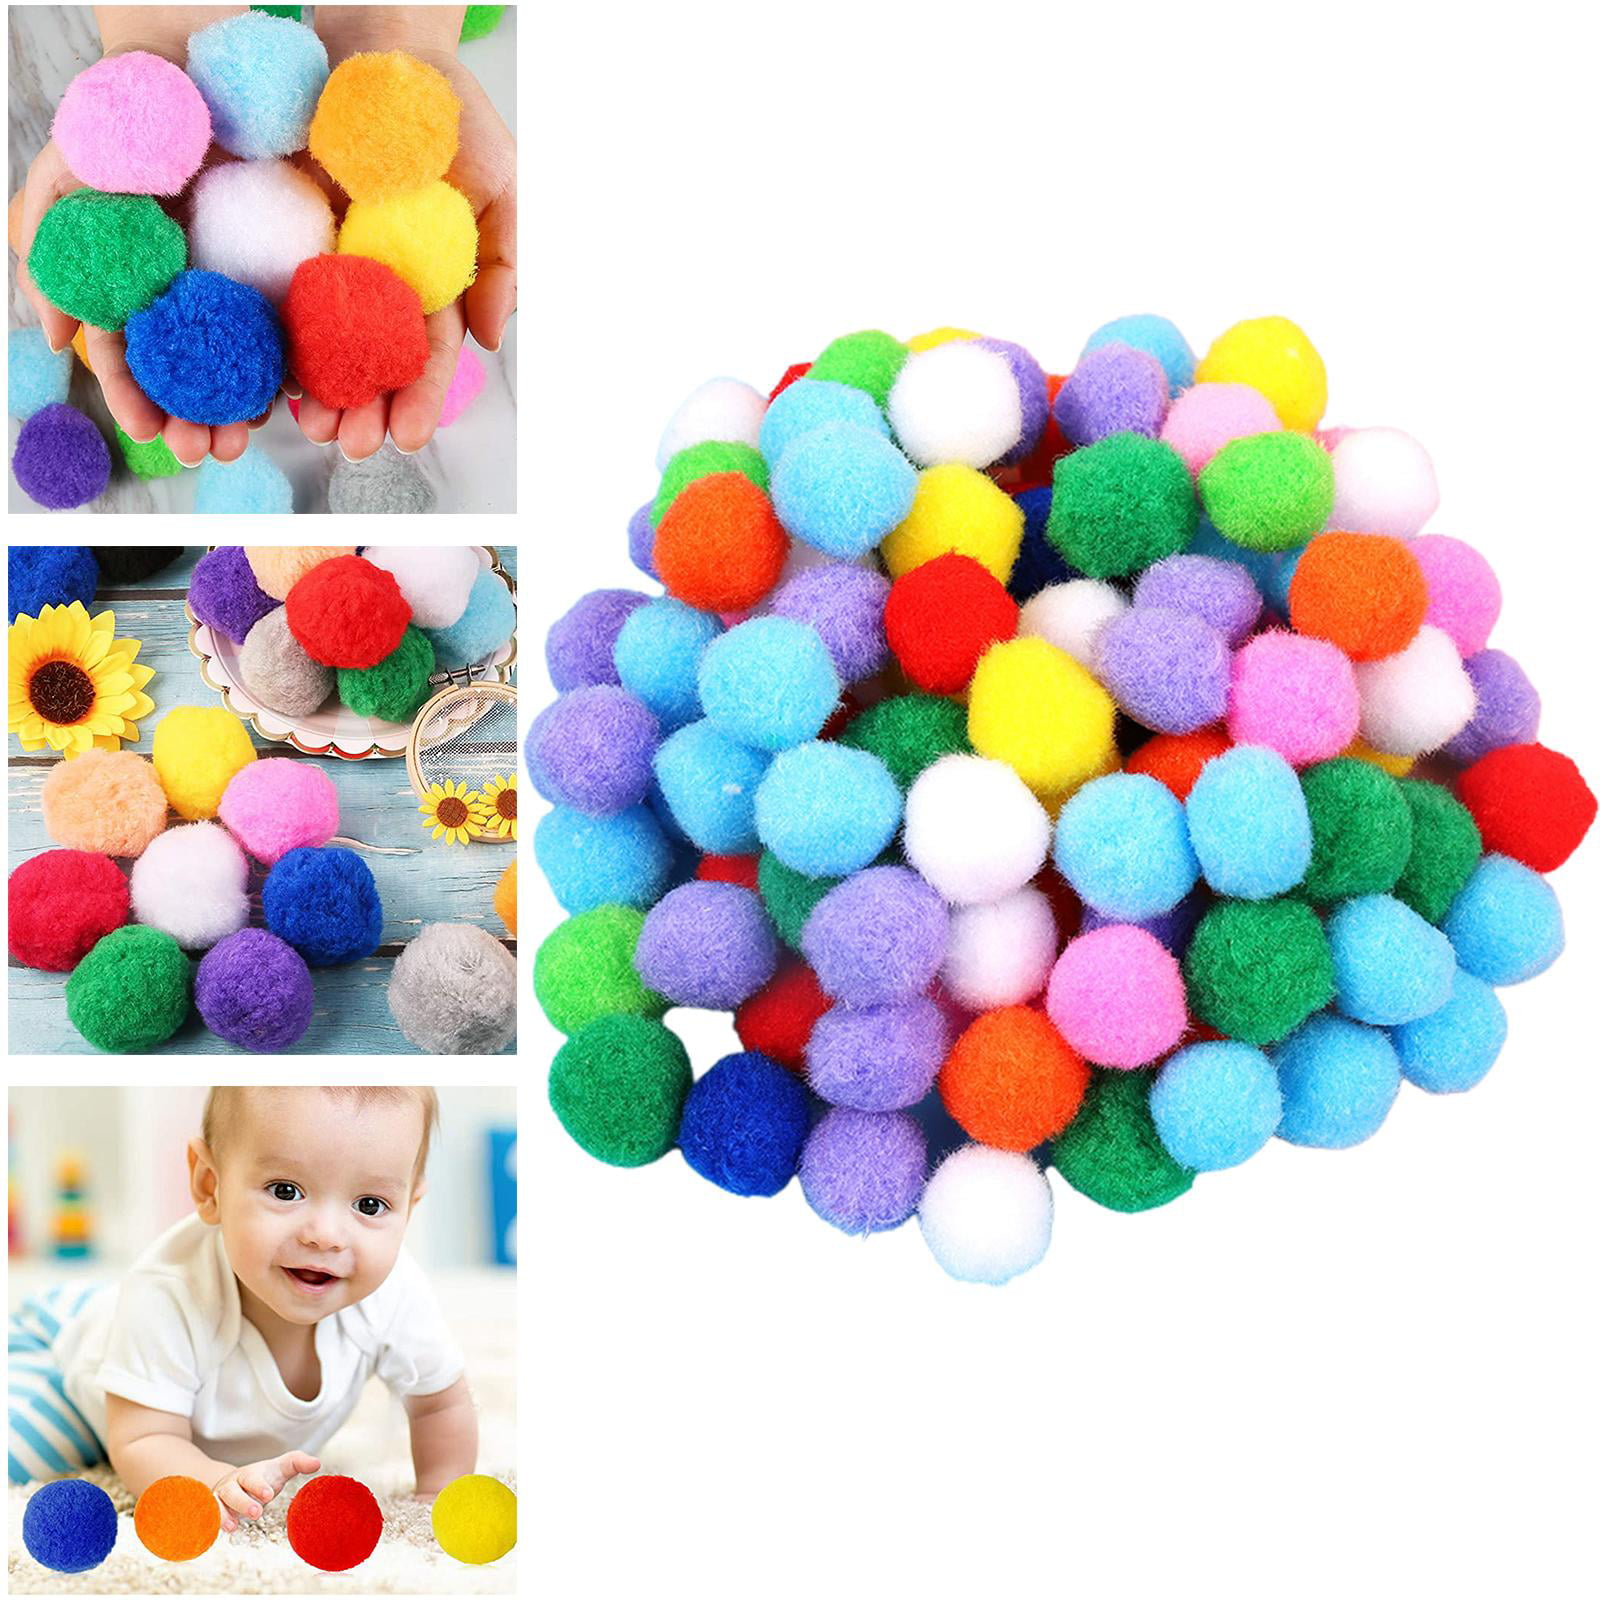 Colorful Puff Balls Stock Photo 725184259